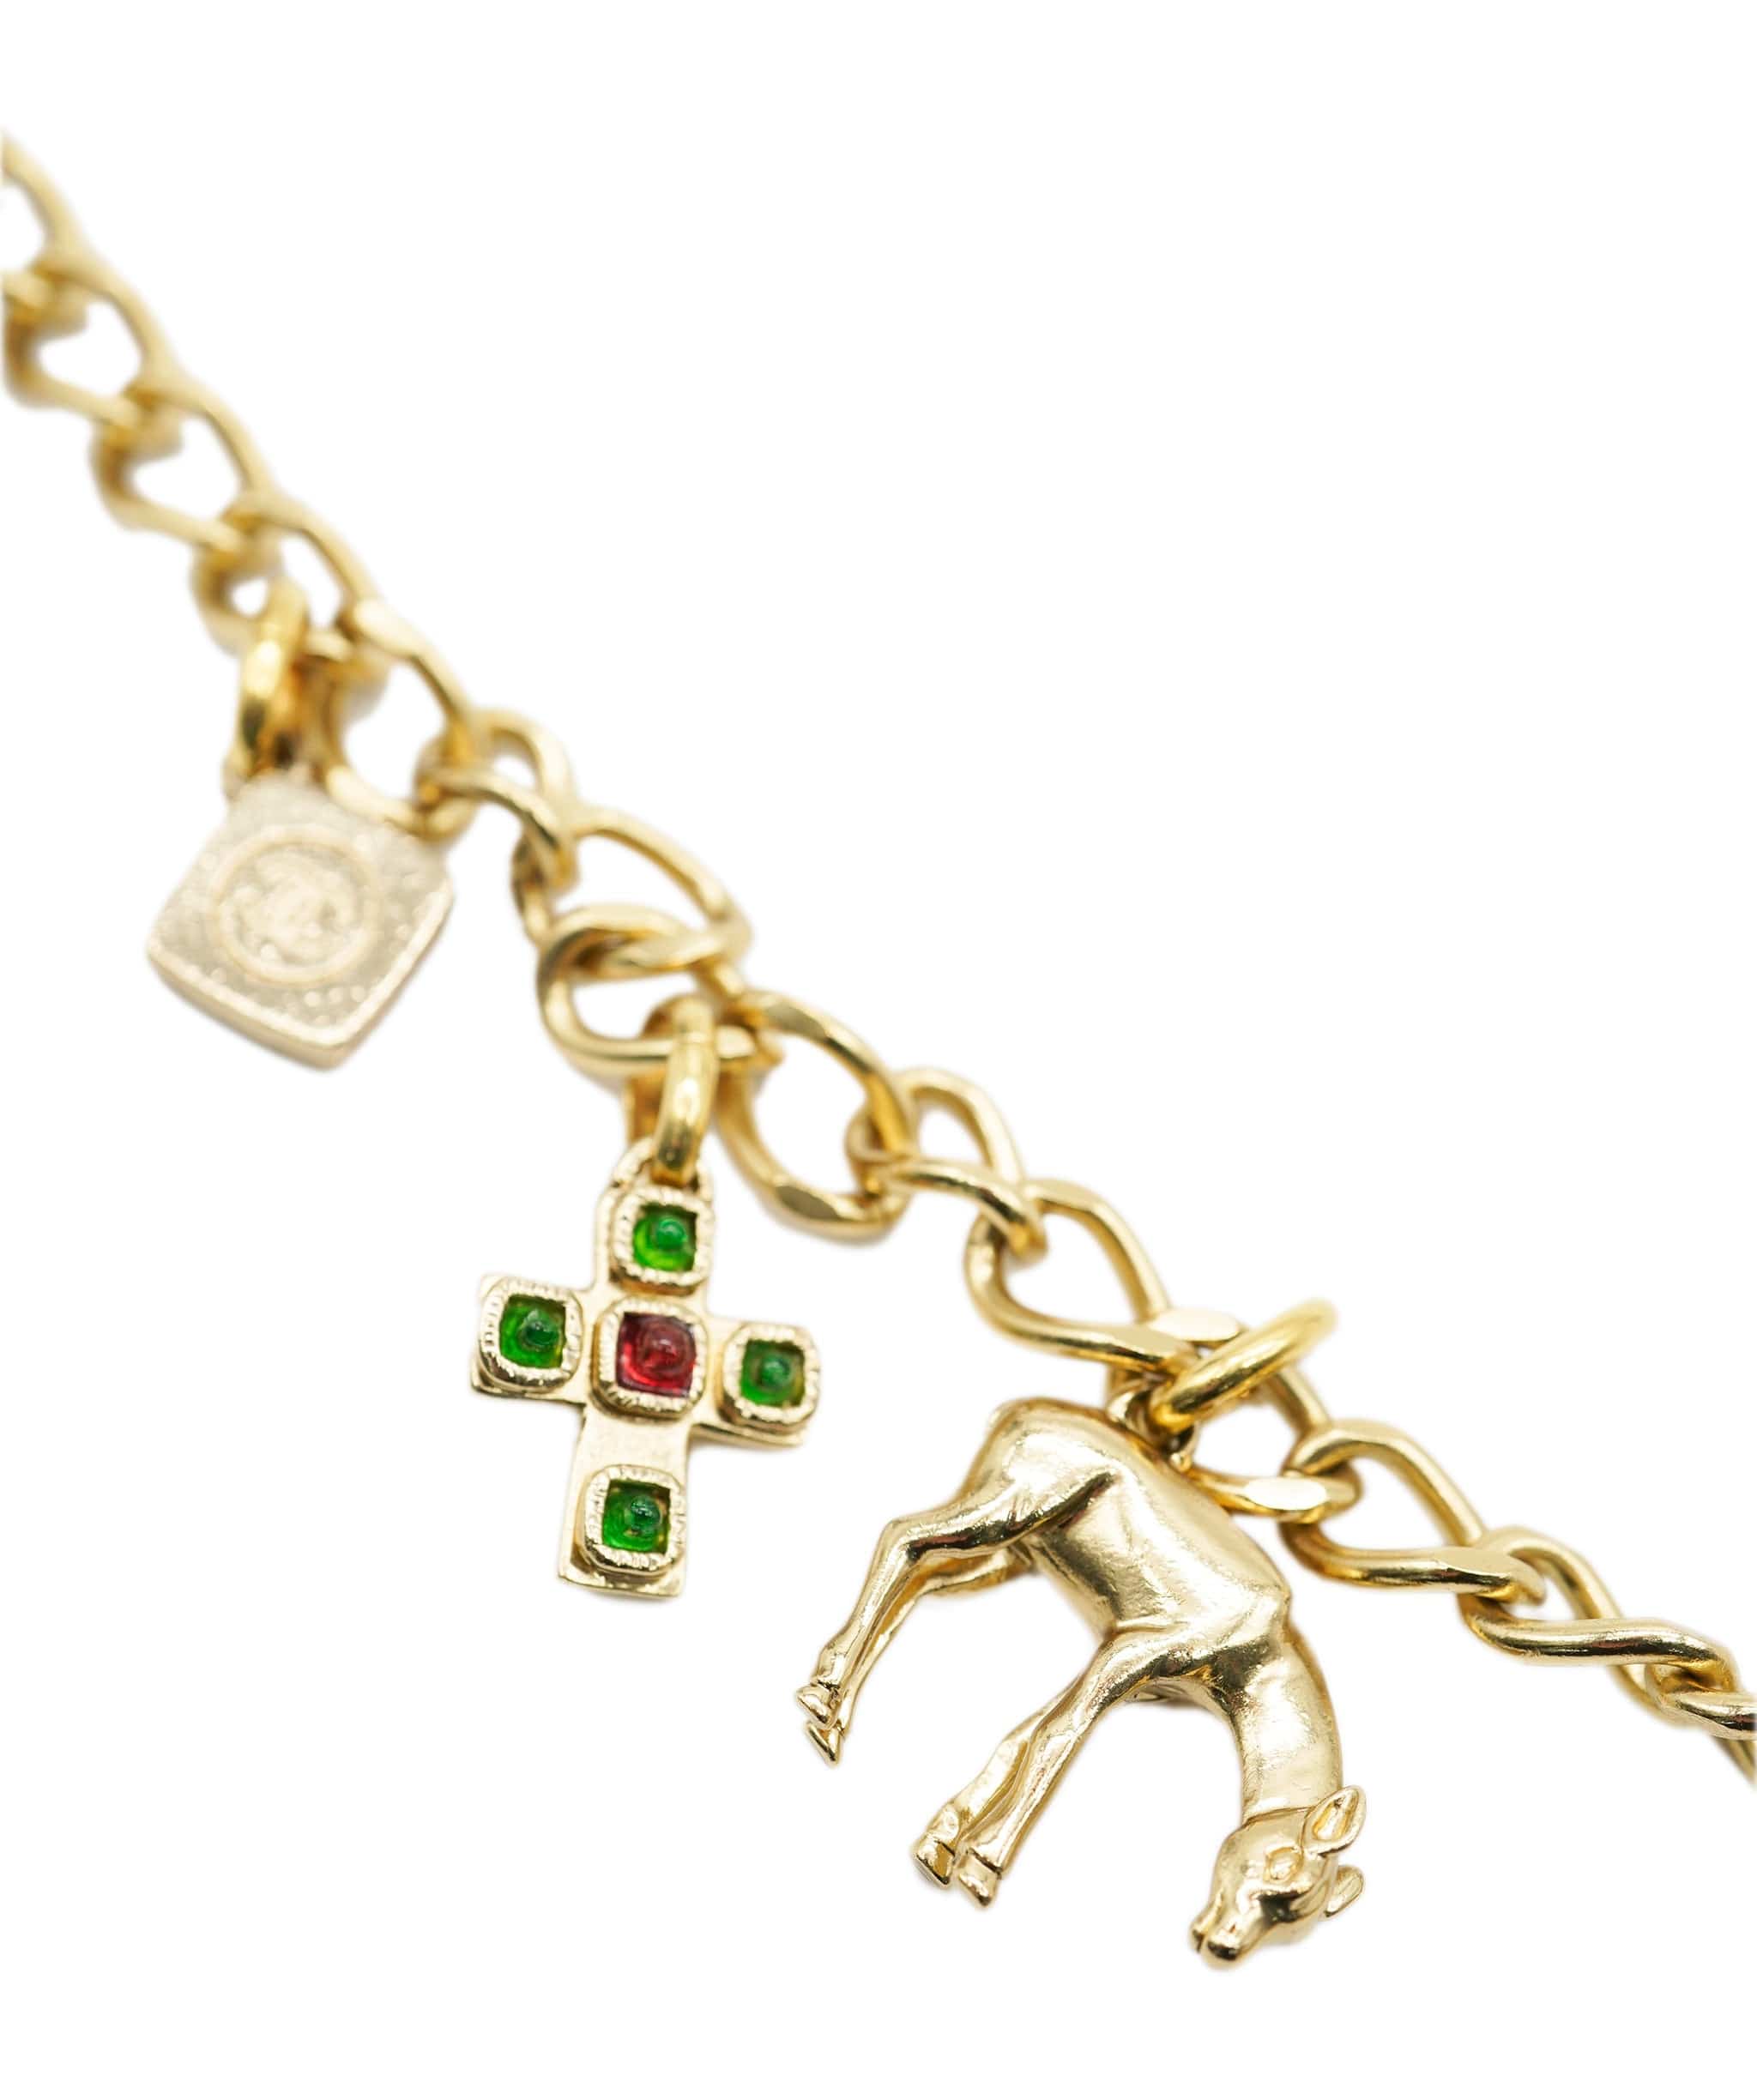 Chanel Chanel 31 Charm Necklace / Belt ASL4520